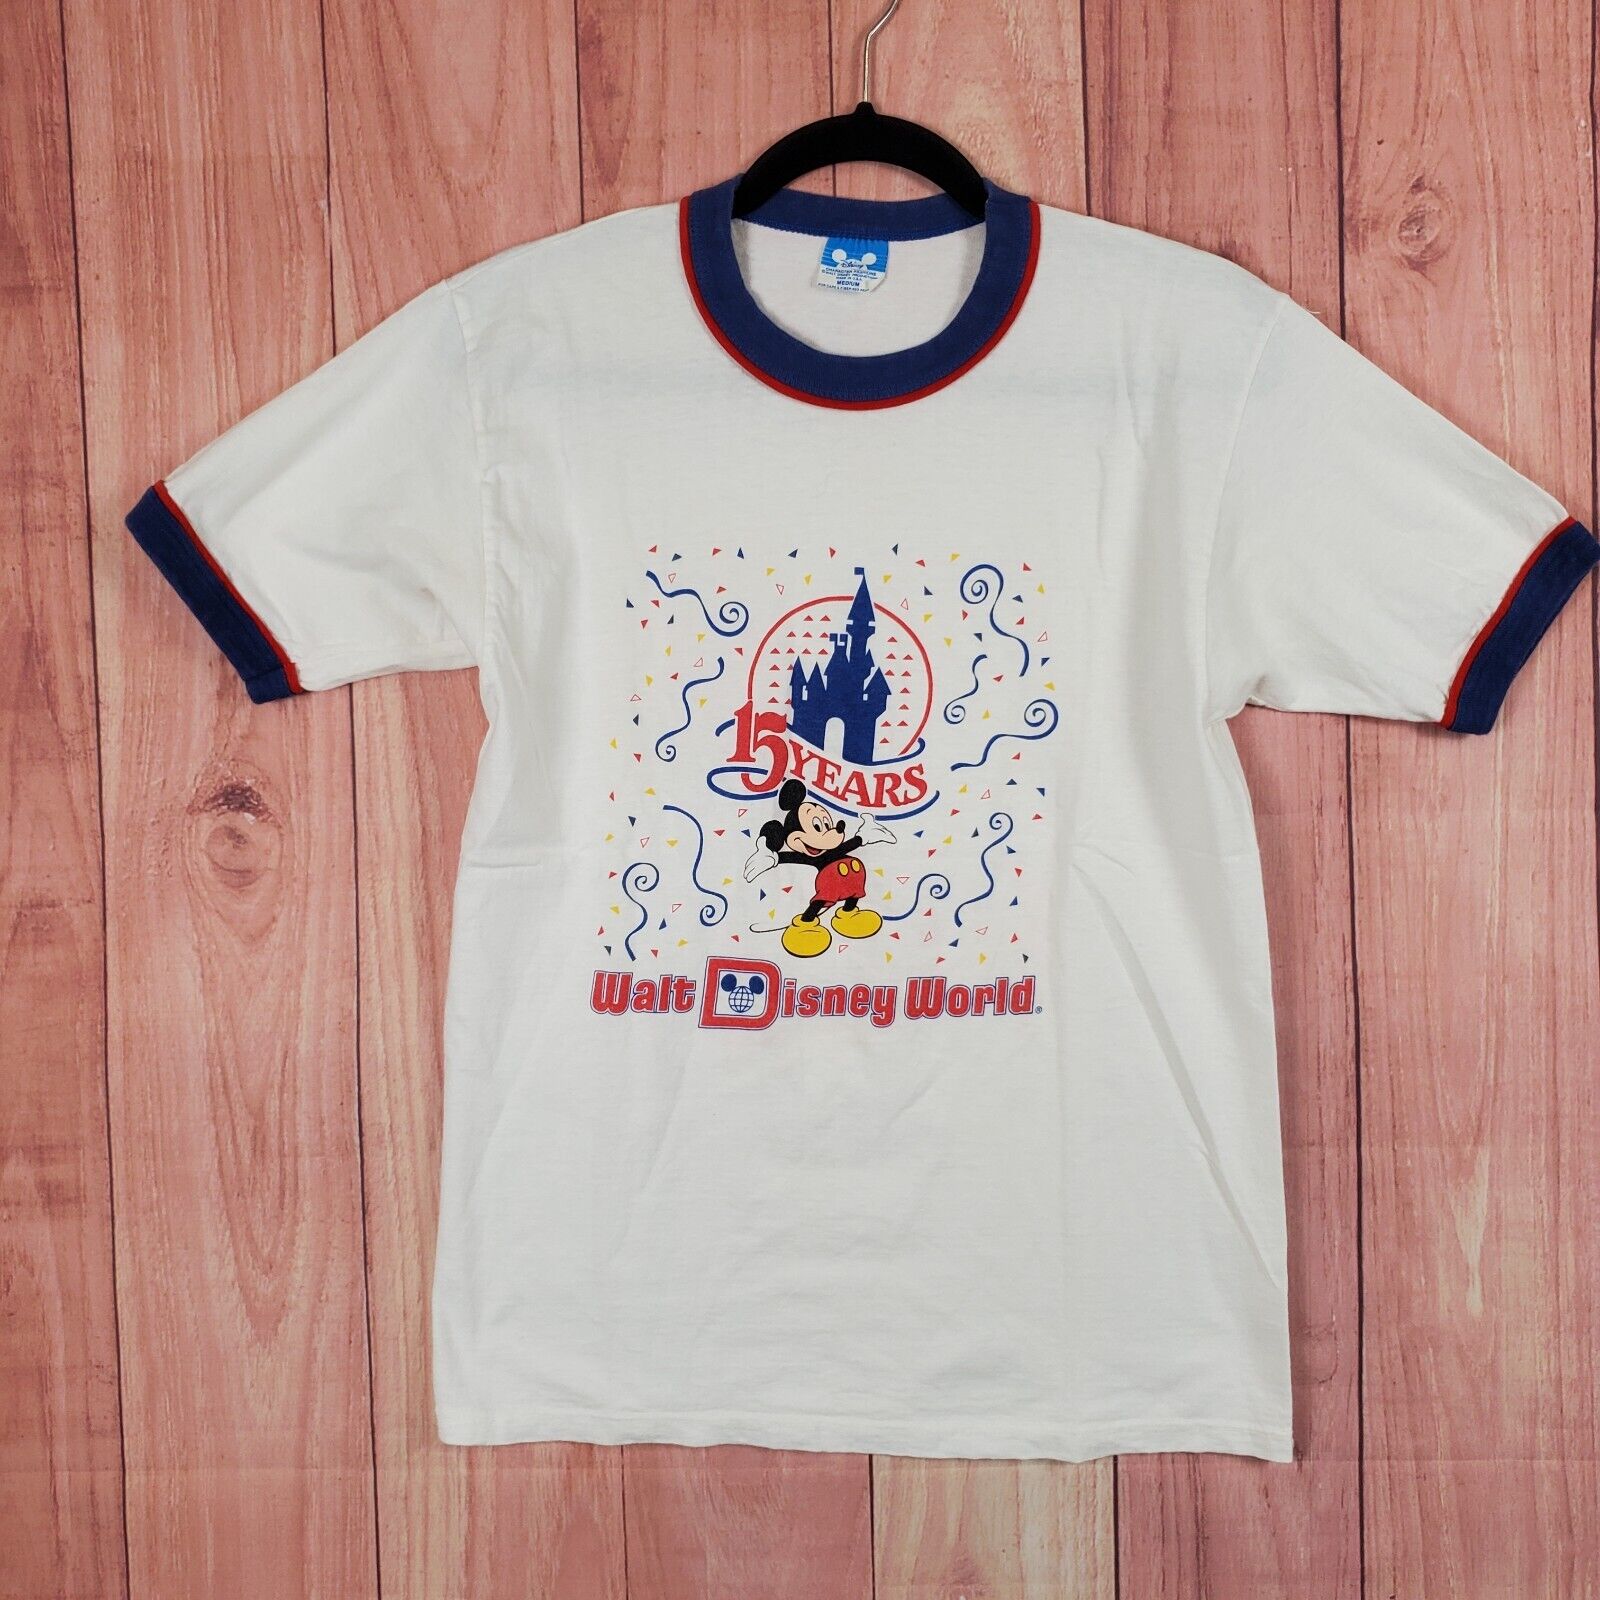 Vintage Disney T-Shirt Sz XS / S 1986 Walt Disney World 15 Years Anniversary